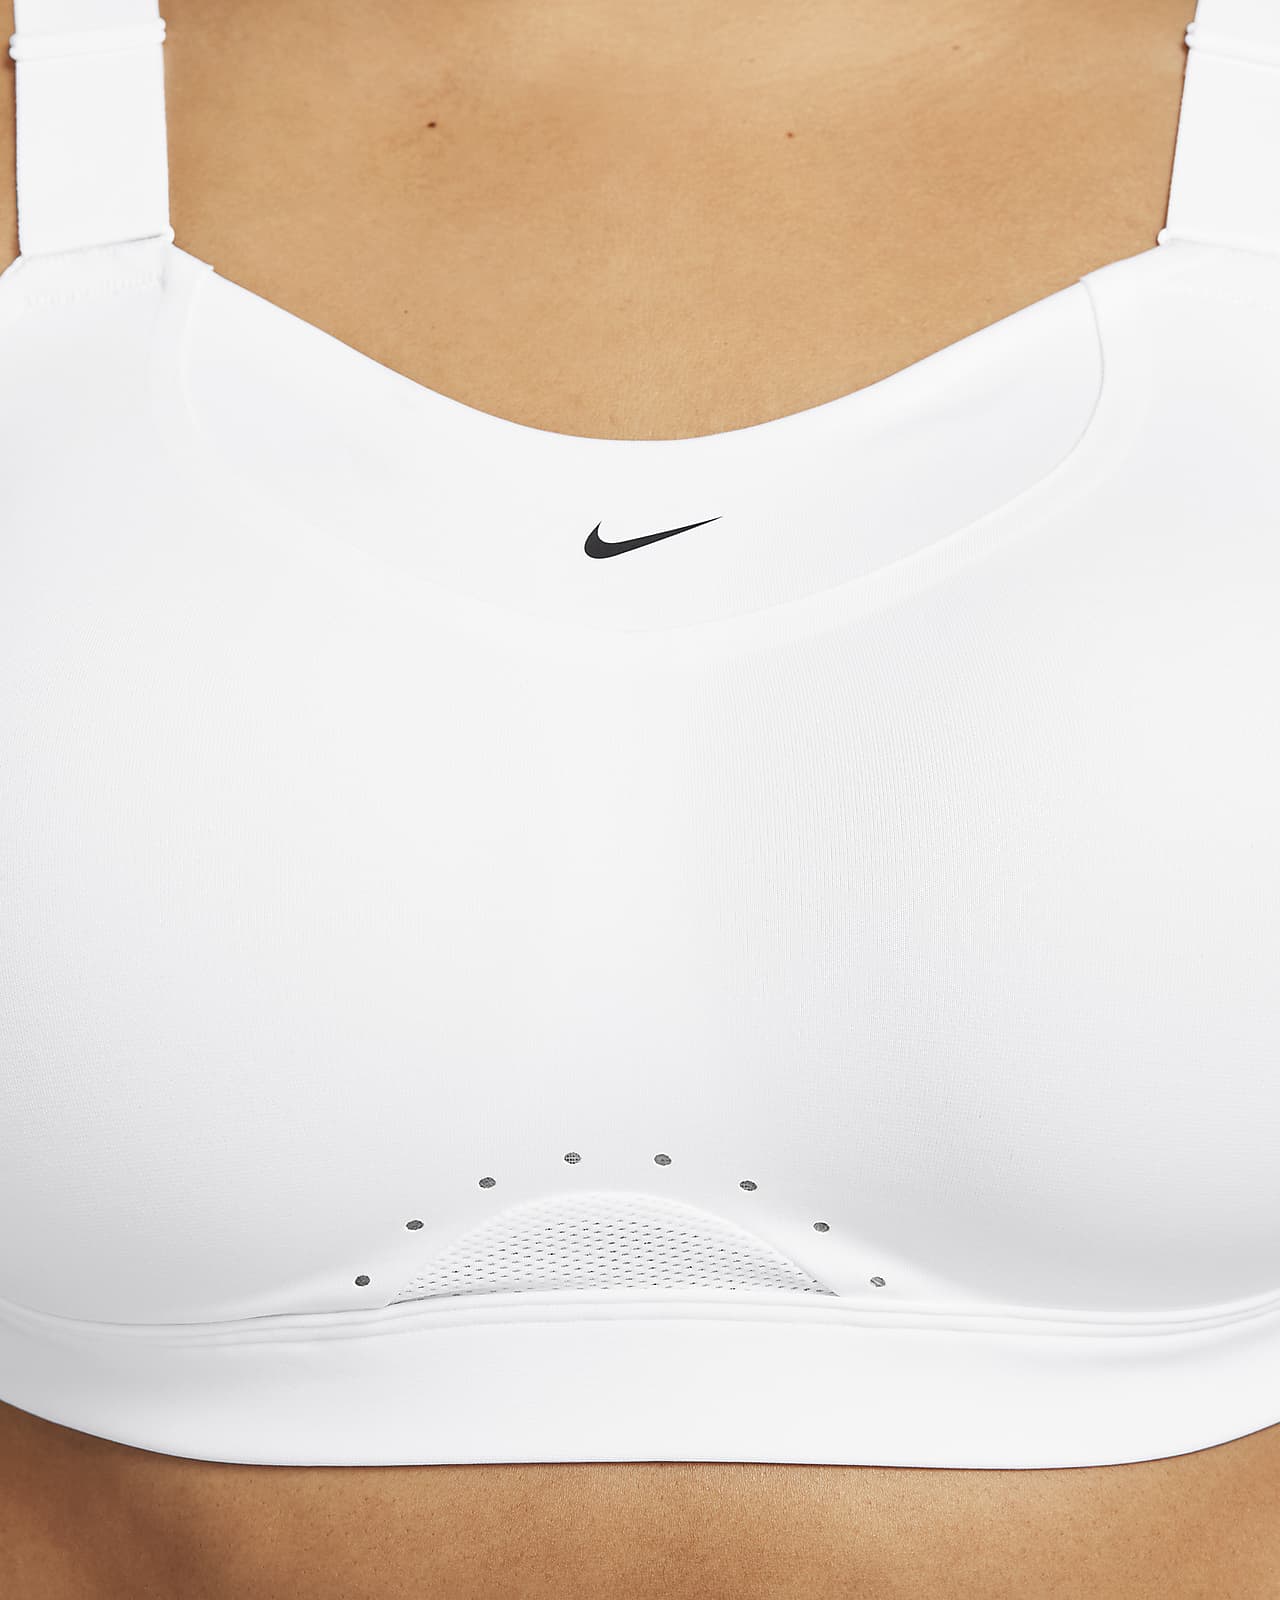 RELLECIGA Women's Push Up Bra Inserts Breast Enhancer Cups Removable Sport Bra  Cups Inserts (US, Alpha, Medium, Regular, Regular, Black) at  Women's  Clothing store